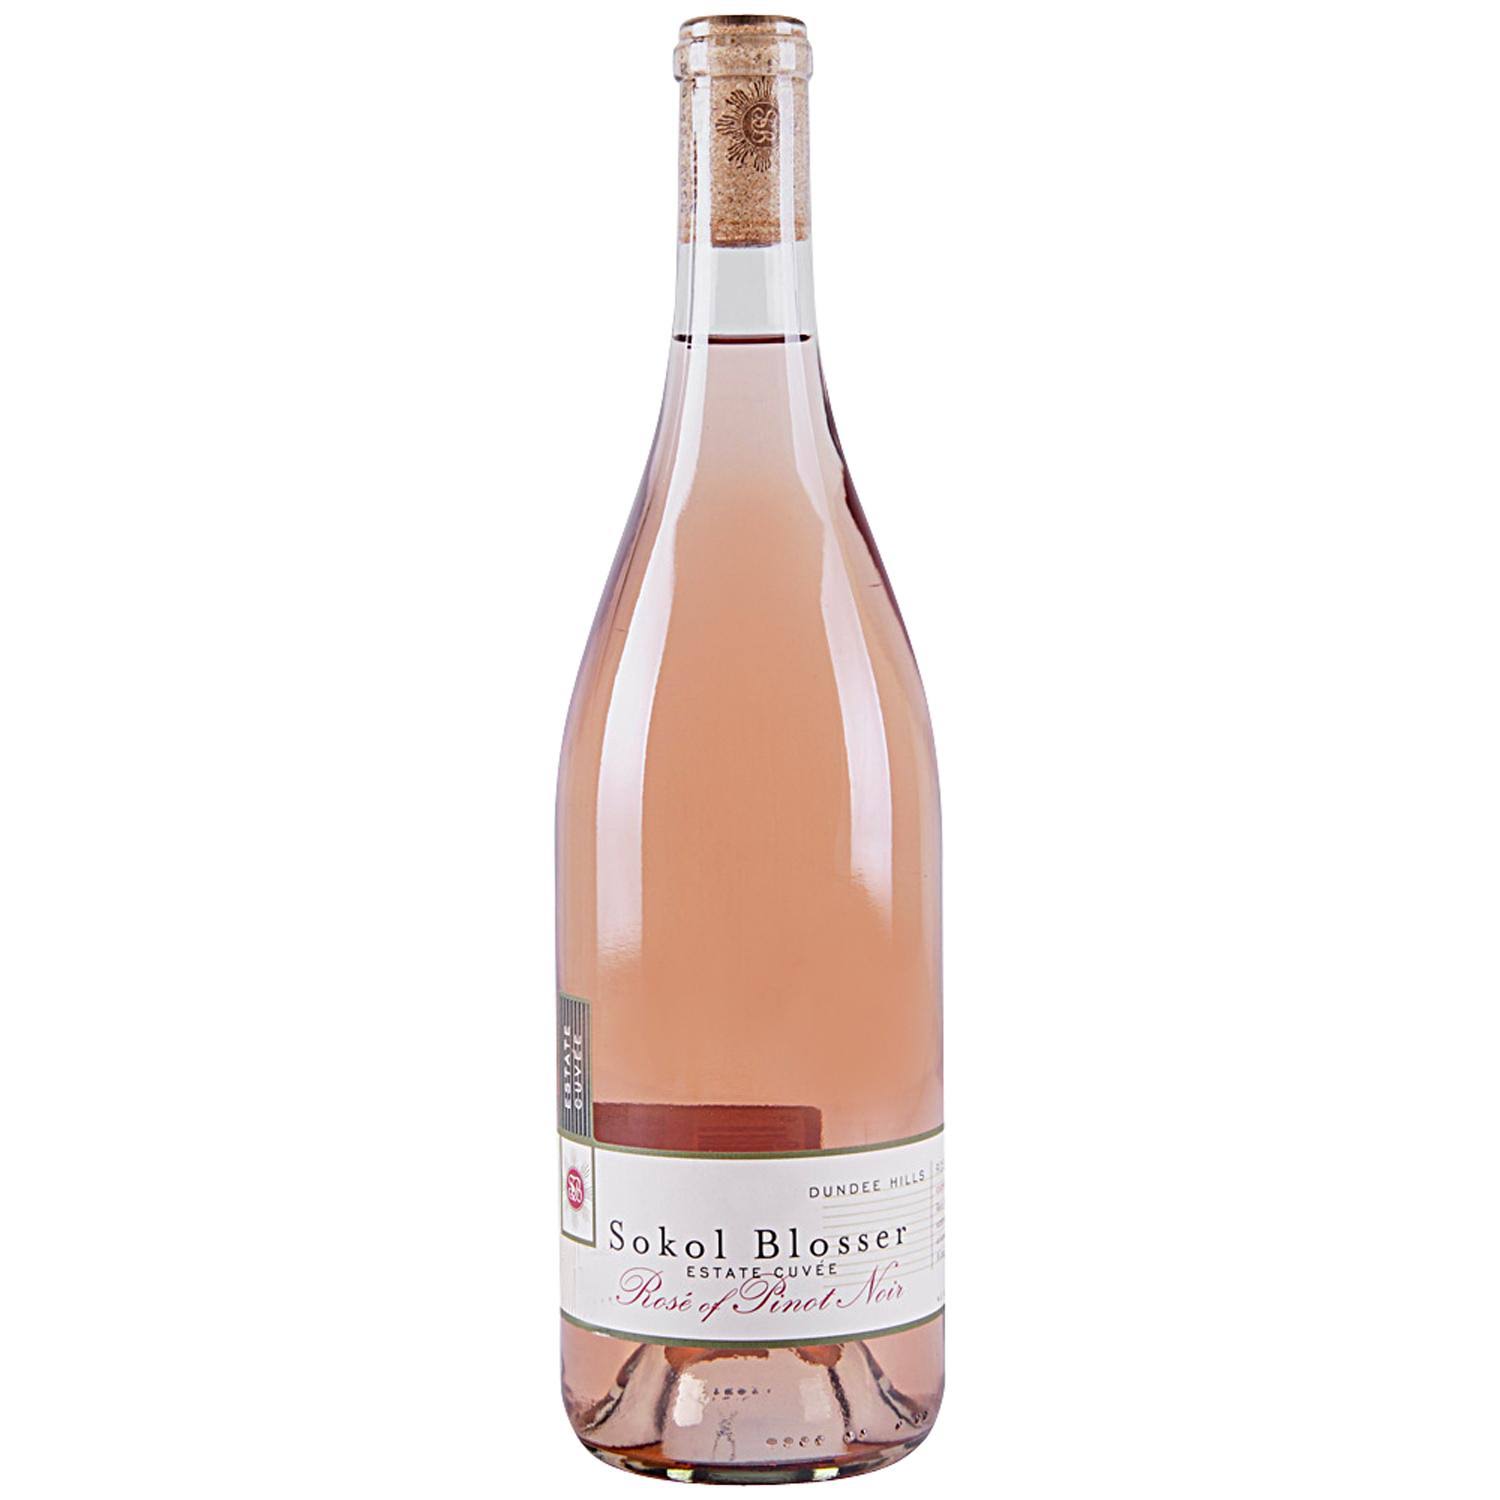 Sokol Blosser Pinot Noir, Rose, Willamette Valley - 750 ml